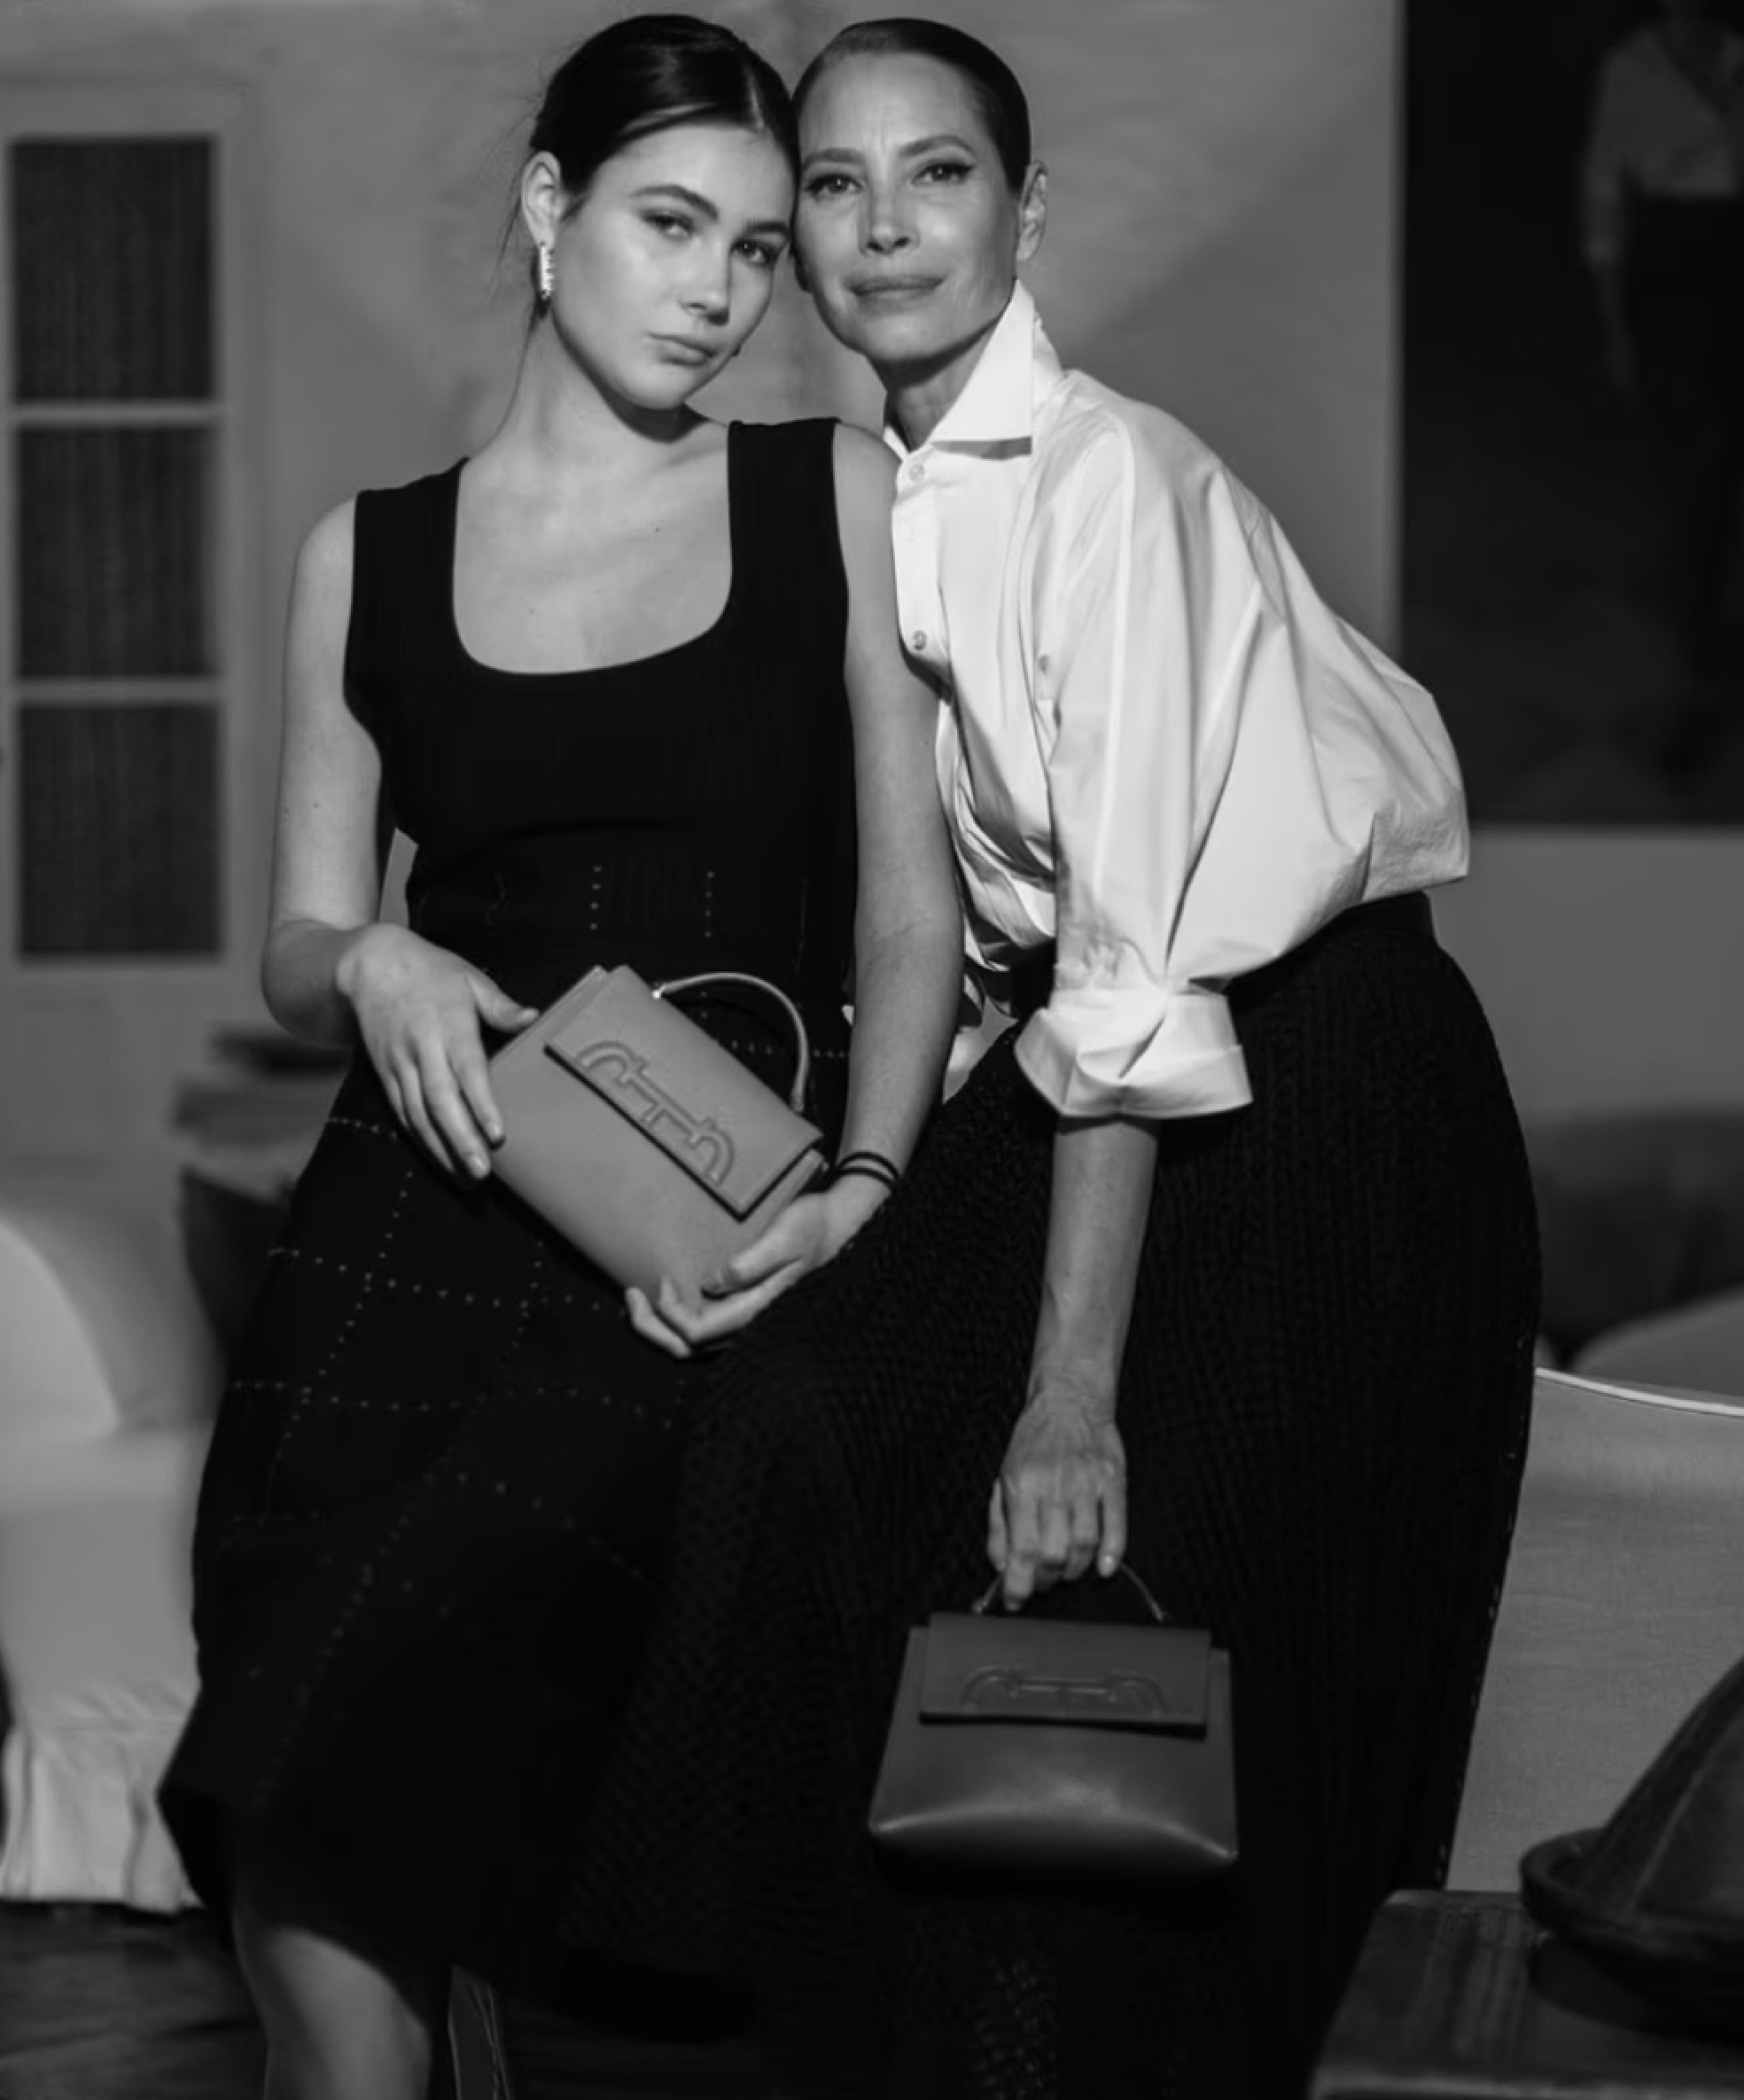 Supermodels grace Kim Jones' Fendi front-row during Milan Fashion